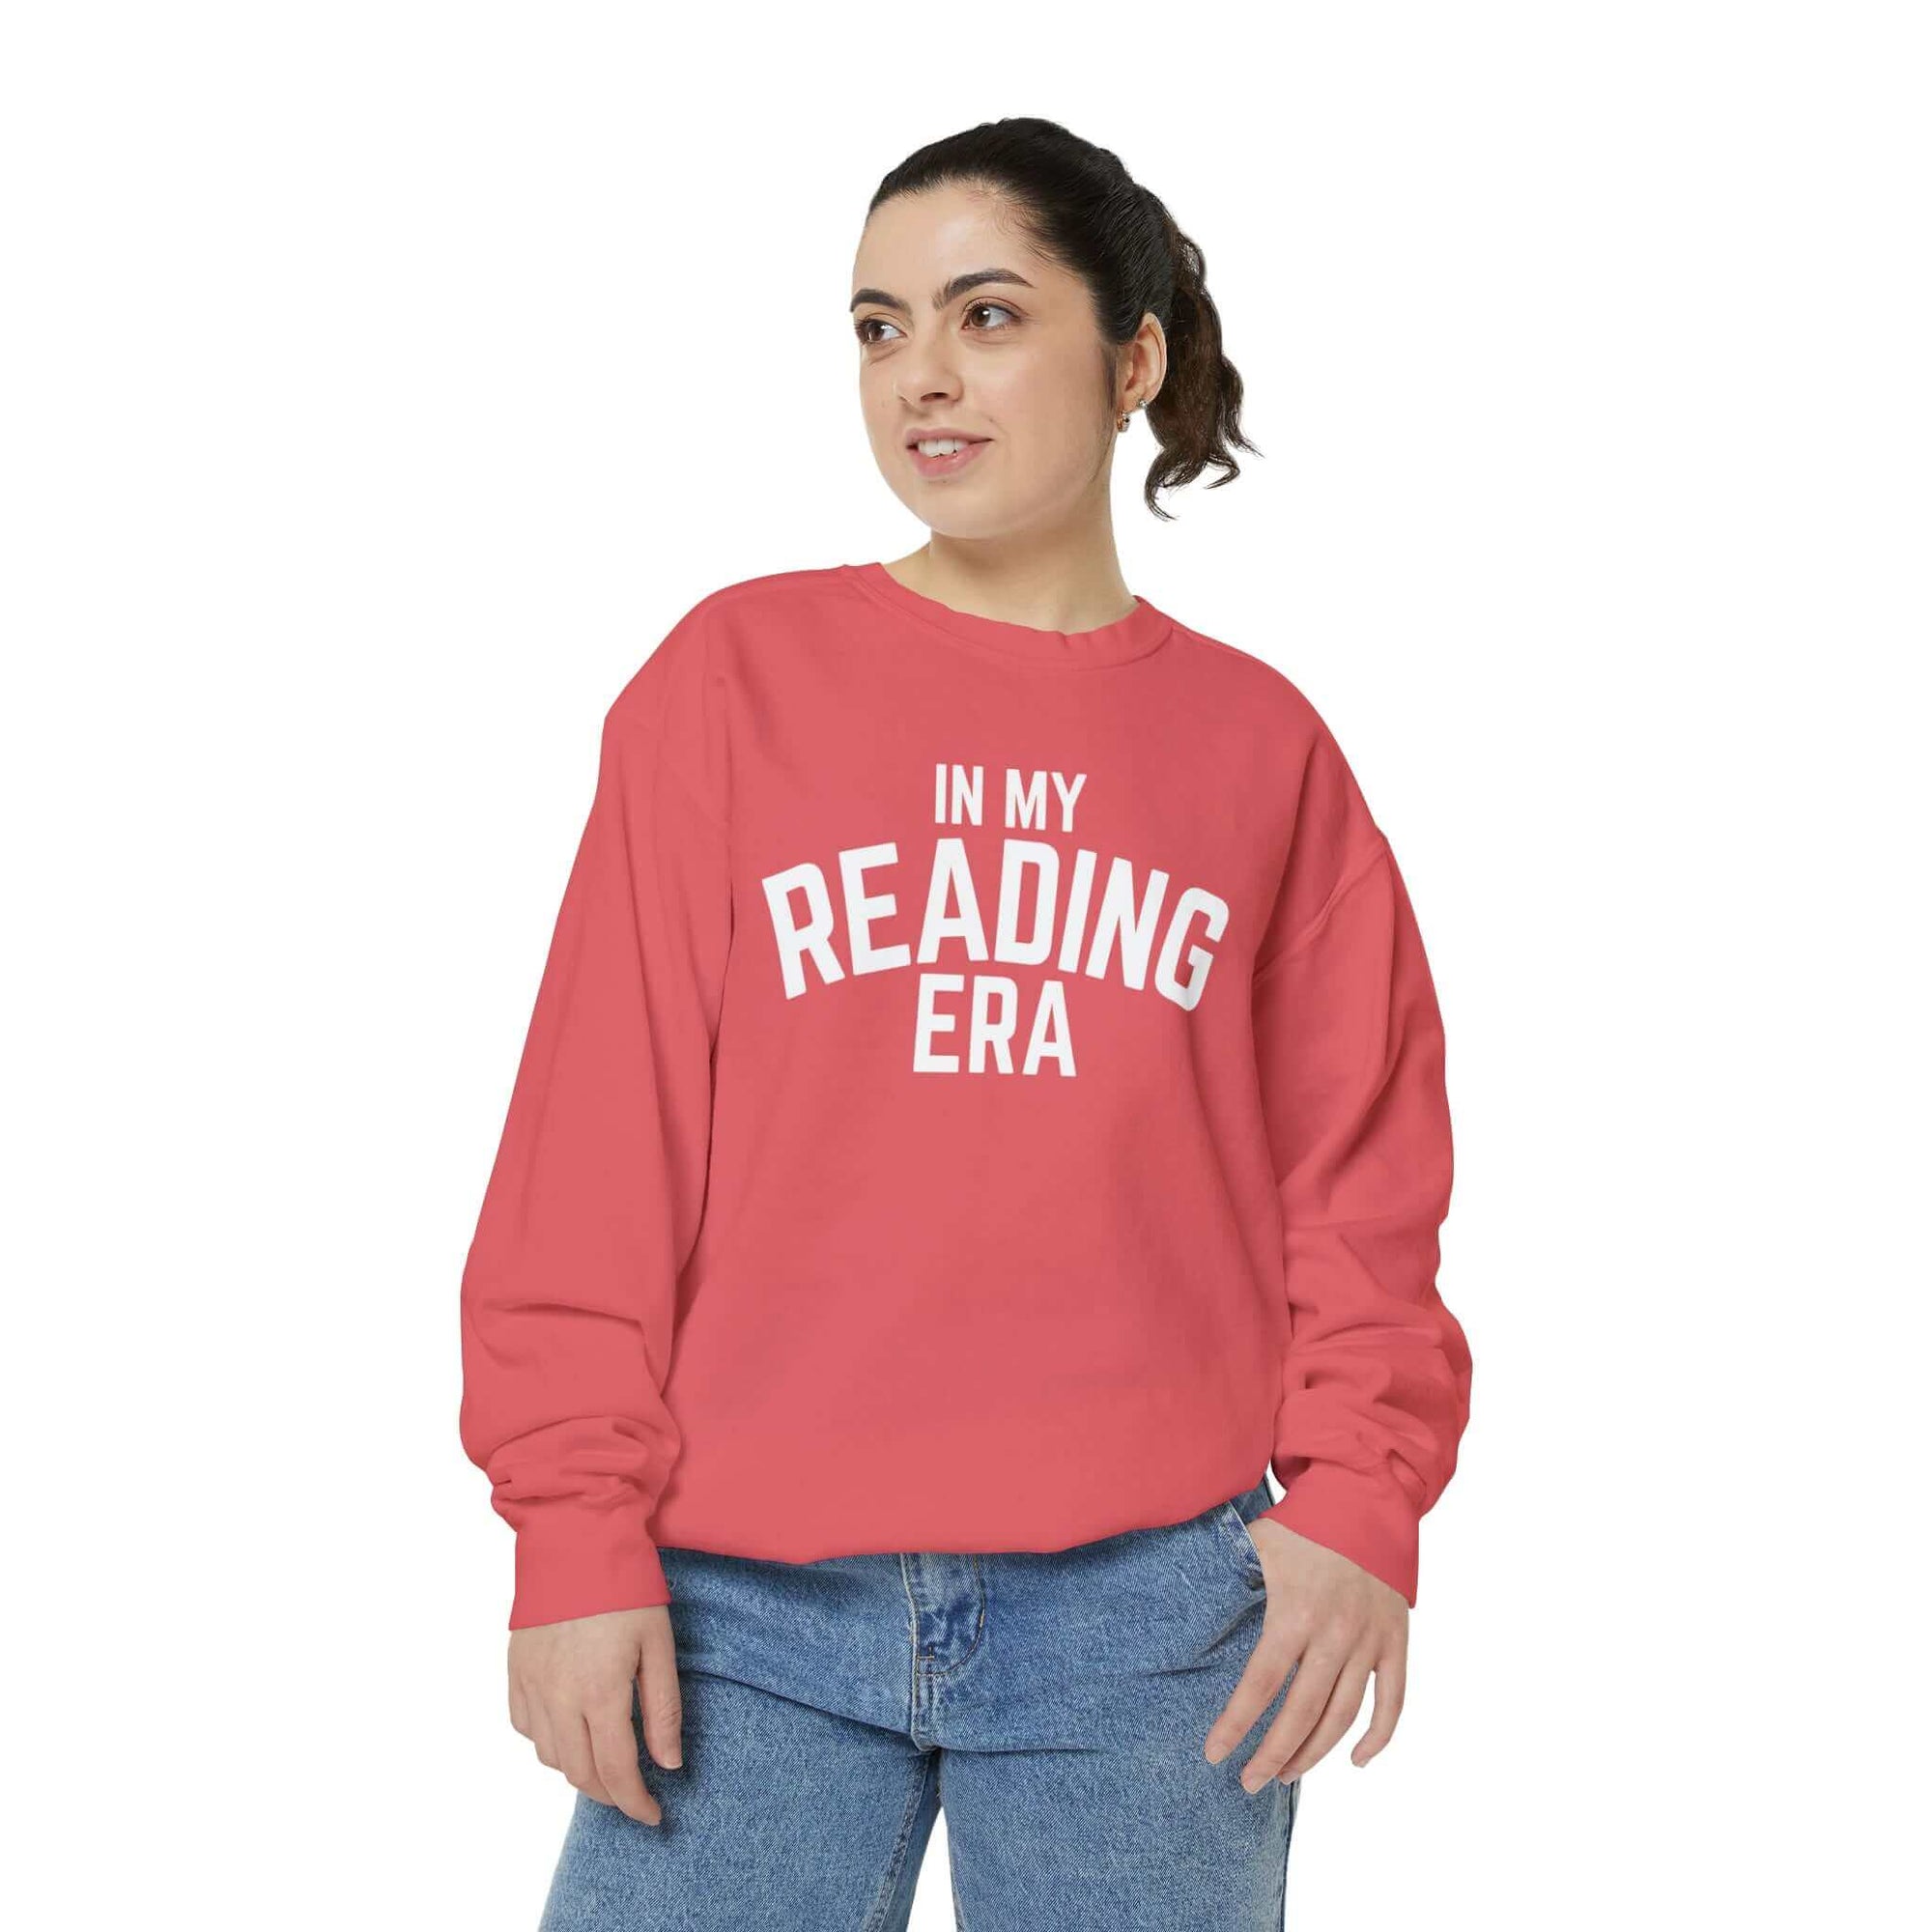 In My Reading Era Sweatshirt (White Text)